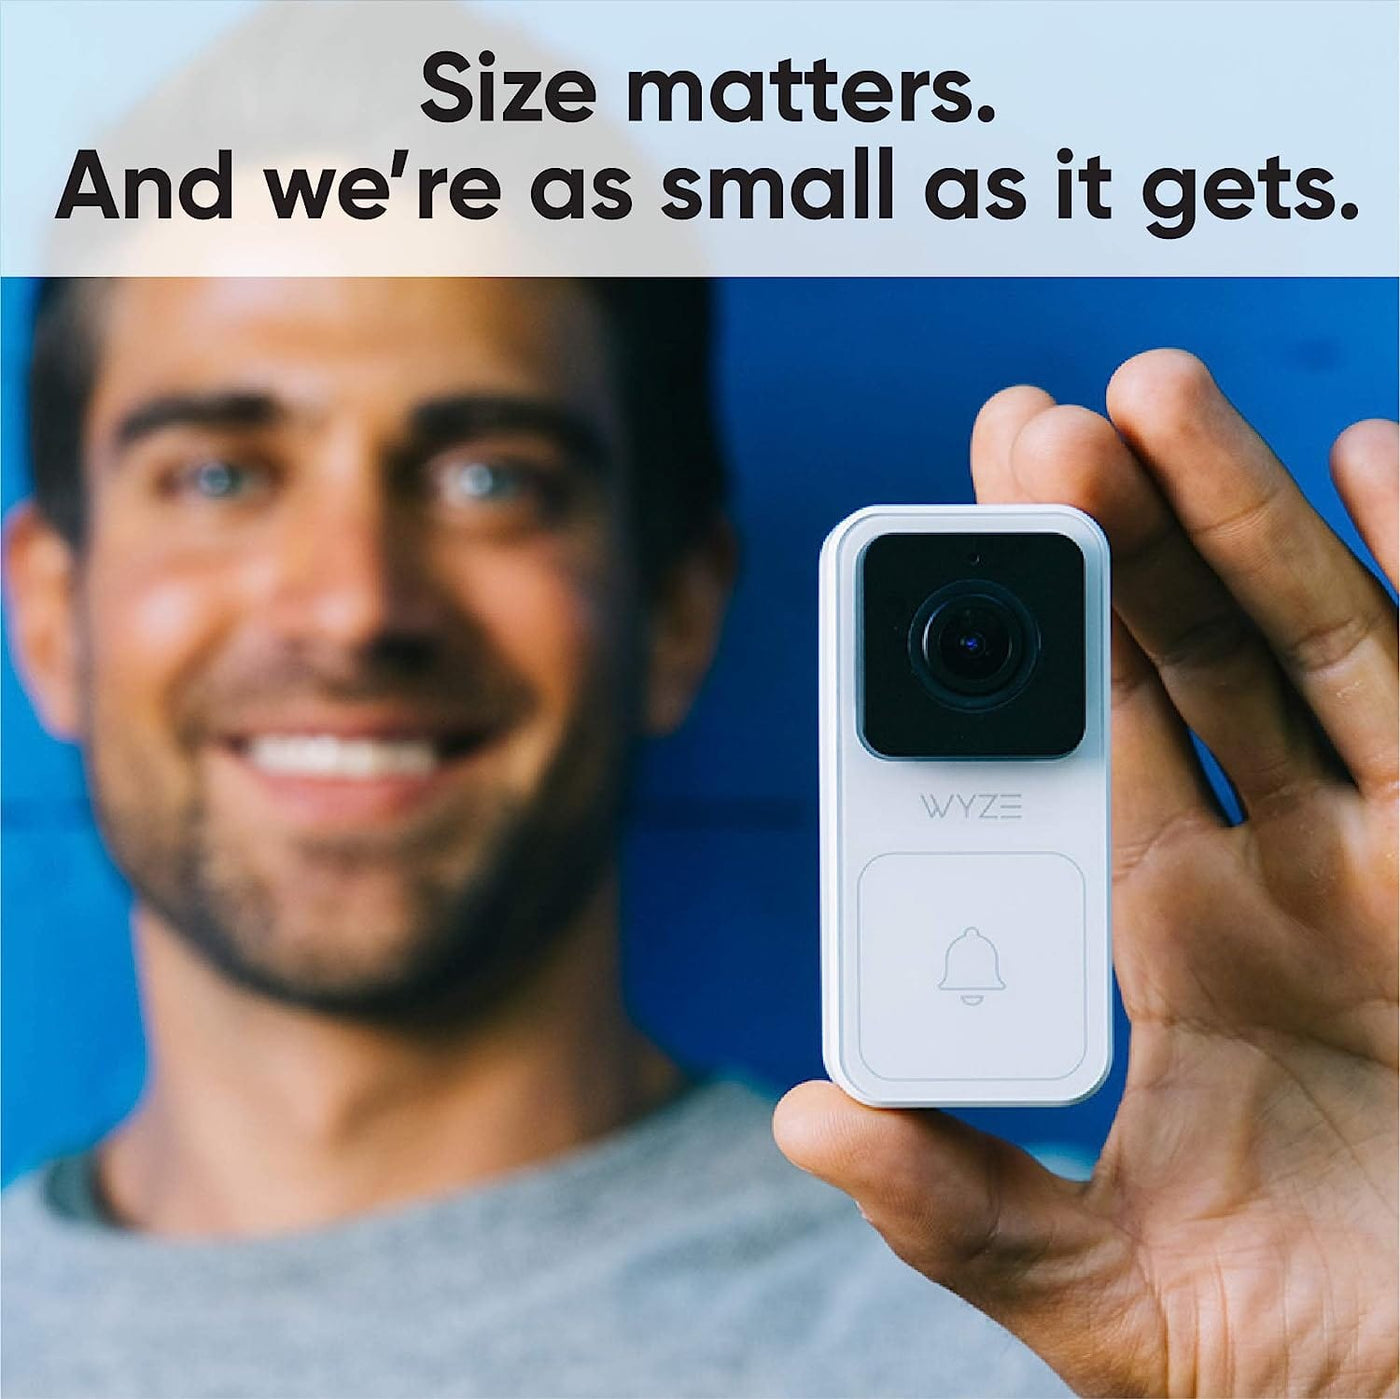 WYZE Video Doorbell Chime Bundle: 1080p HD Video, Night Vision, 2-Way Audio - Smart Tech Shopping